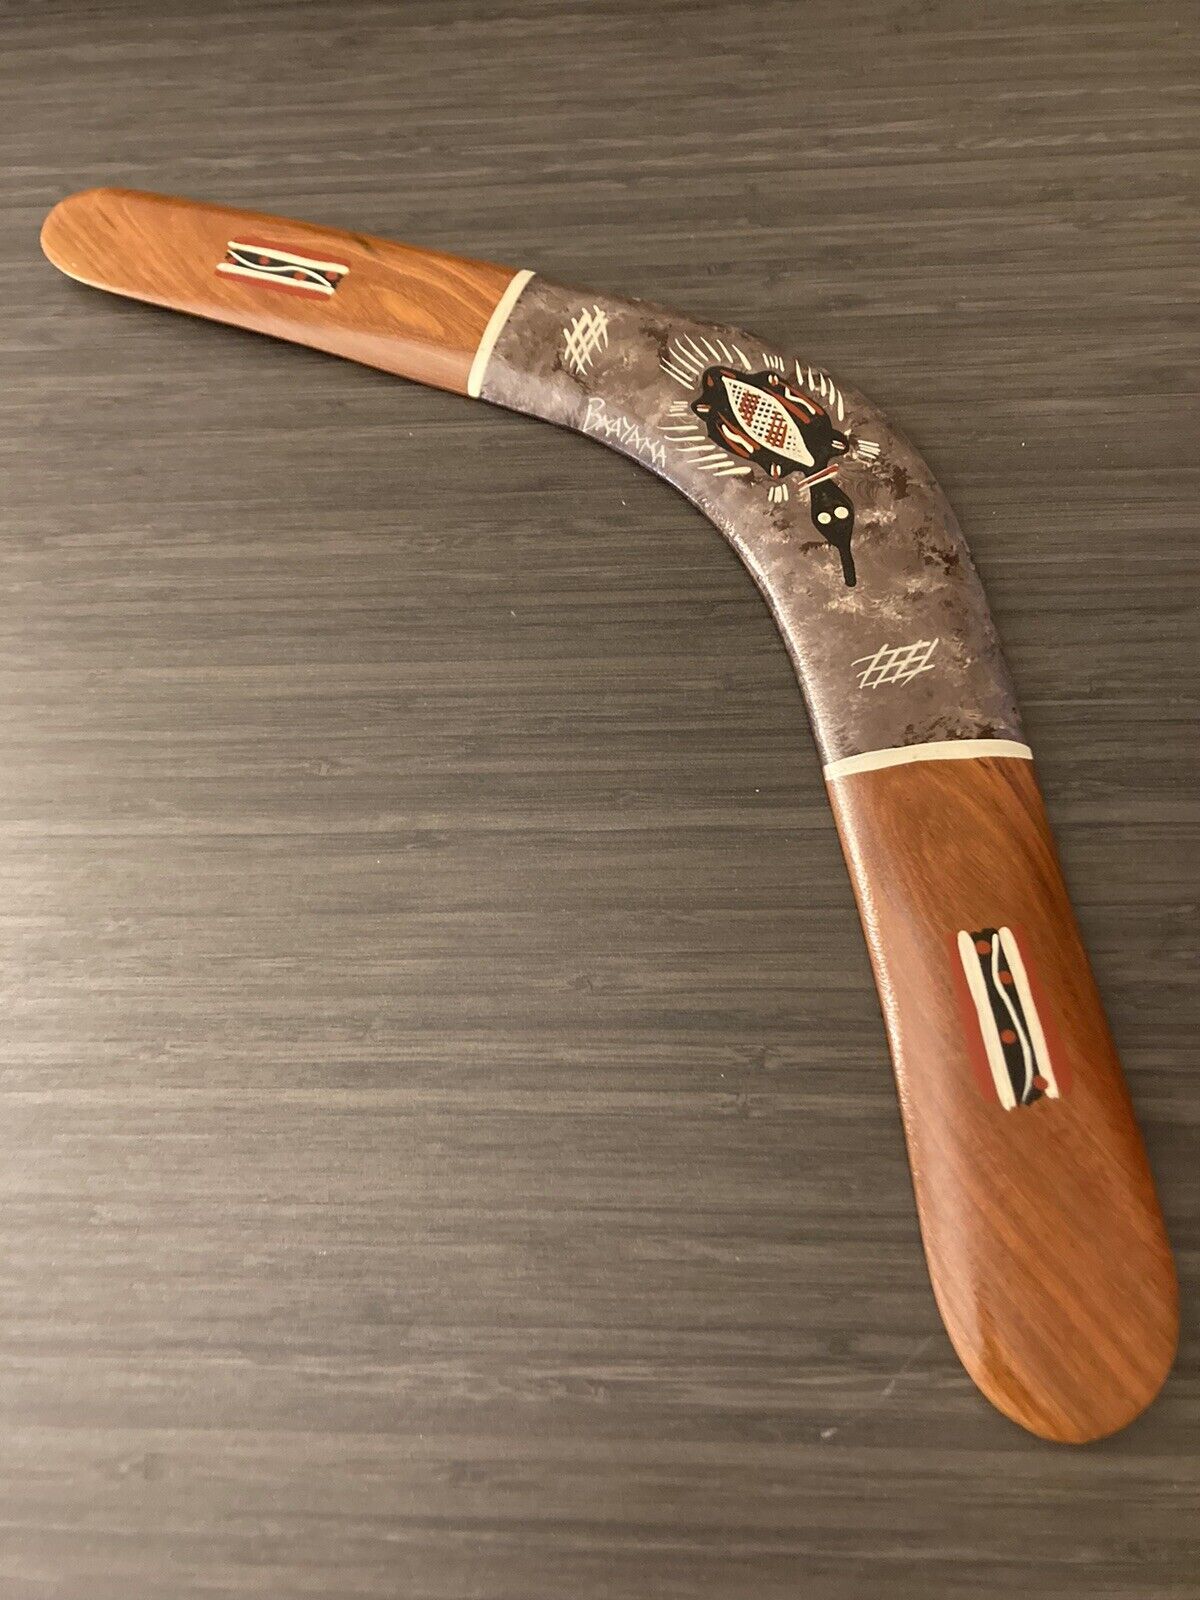 Boomerang 18” Wooden Hand Painted Aboriginal Art Stephen Hogarth(Baayama) Signed